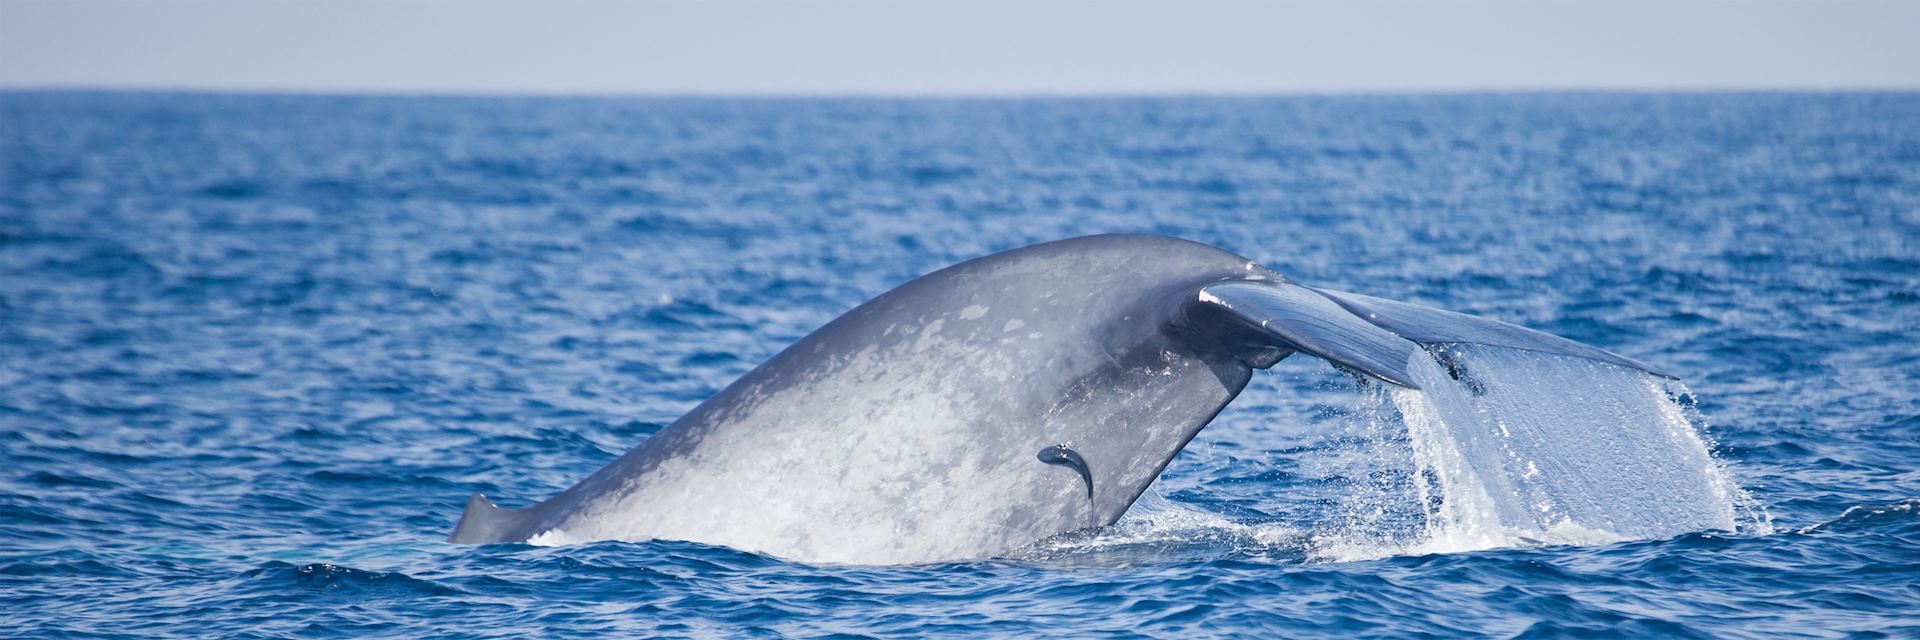 Blue whale near Mirissa Harbour, Sri Lanka